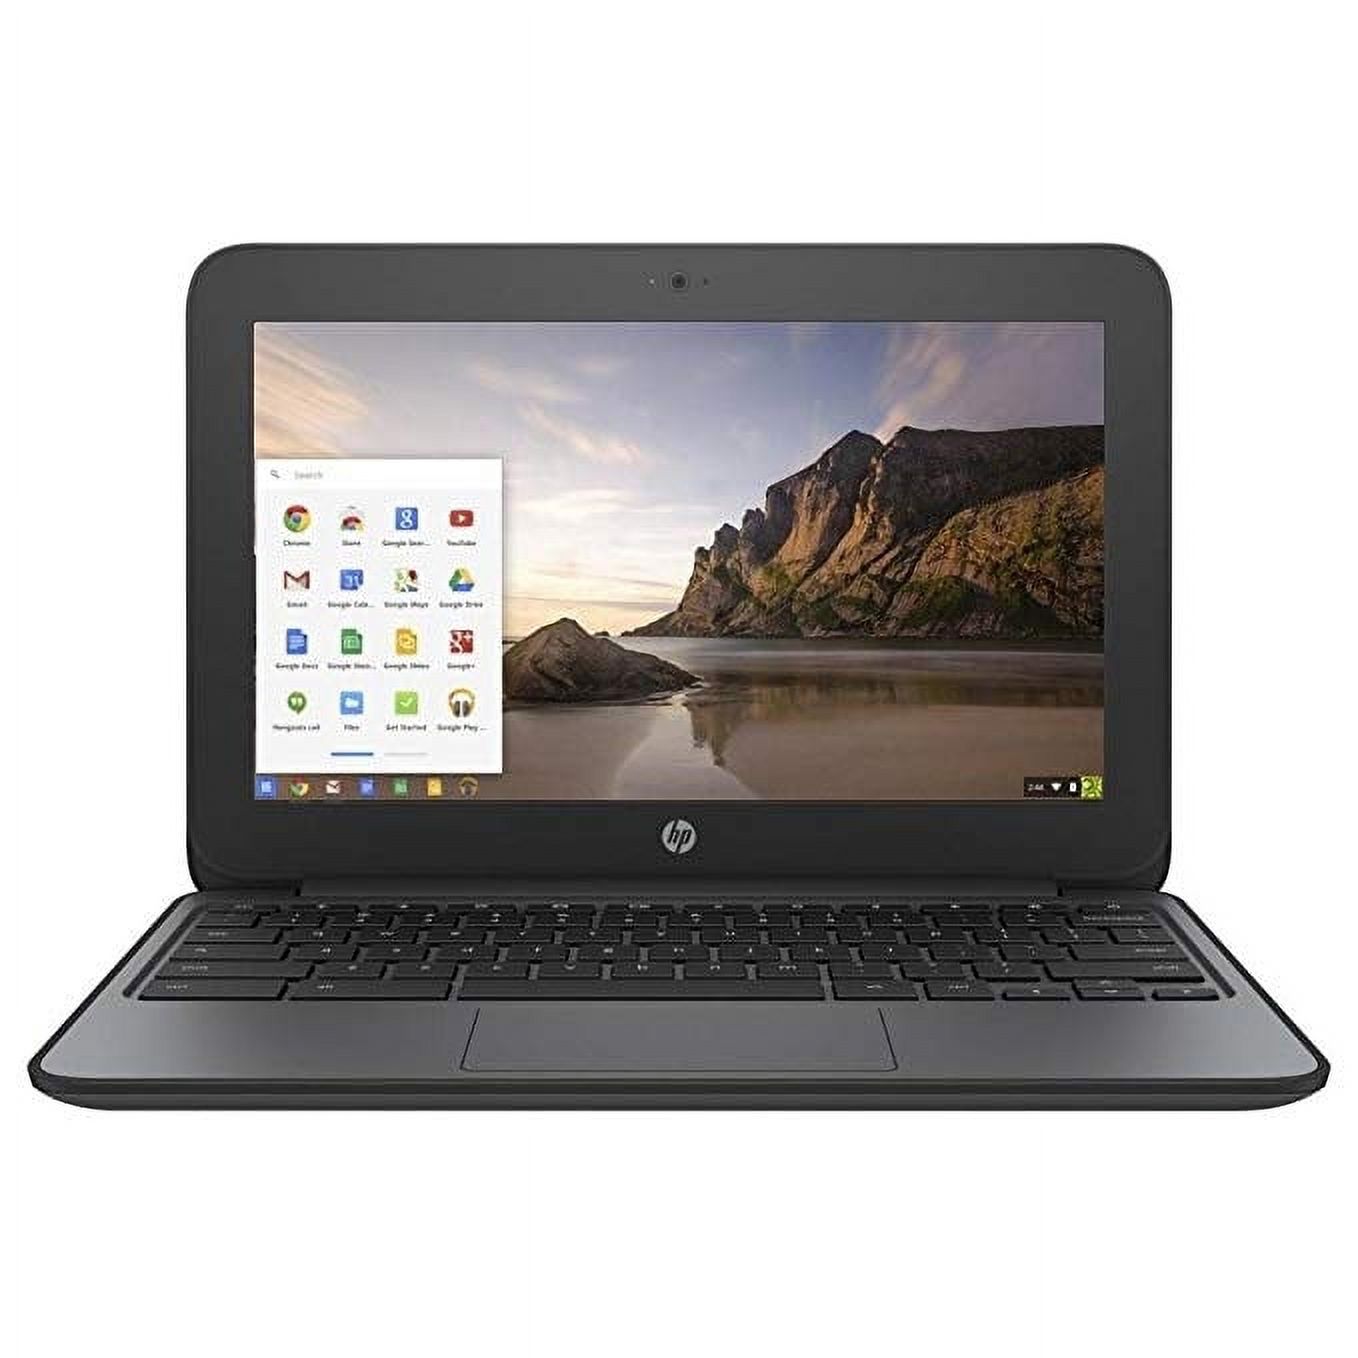 HP Chromebook V2W29UT#ABA Intel Celeron N2840 X2 2.16GHz 2GB 16GB SSD 11.6",&nbsp;Gray&nbsp; (Used) - image 1 of 4